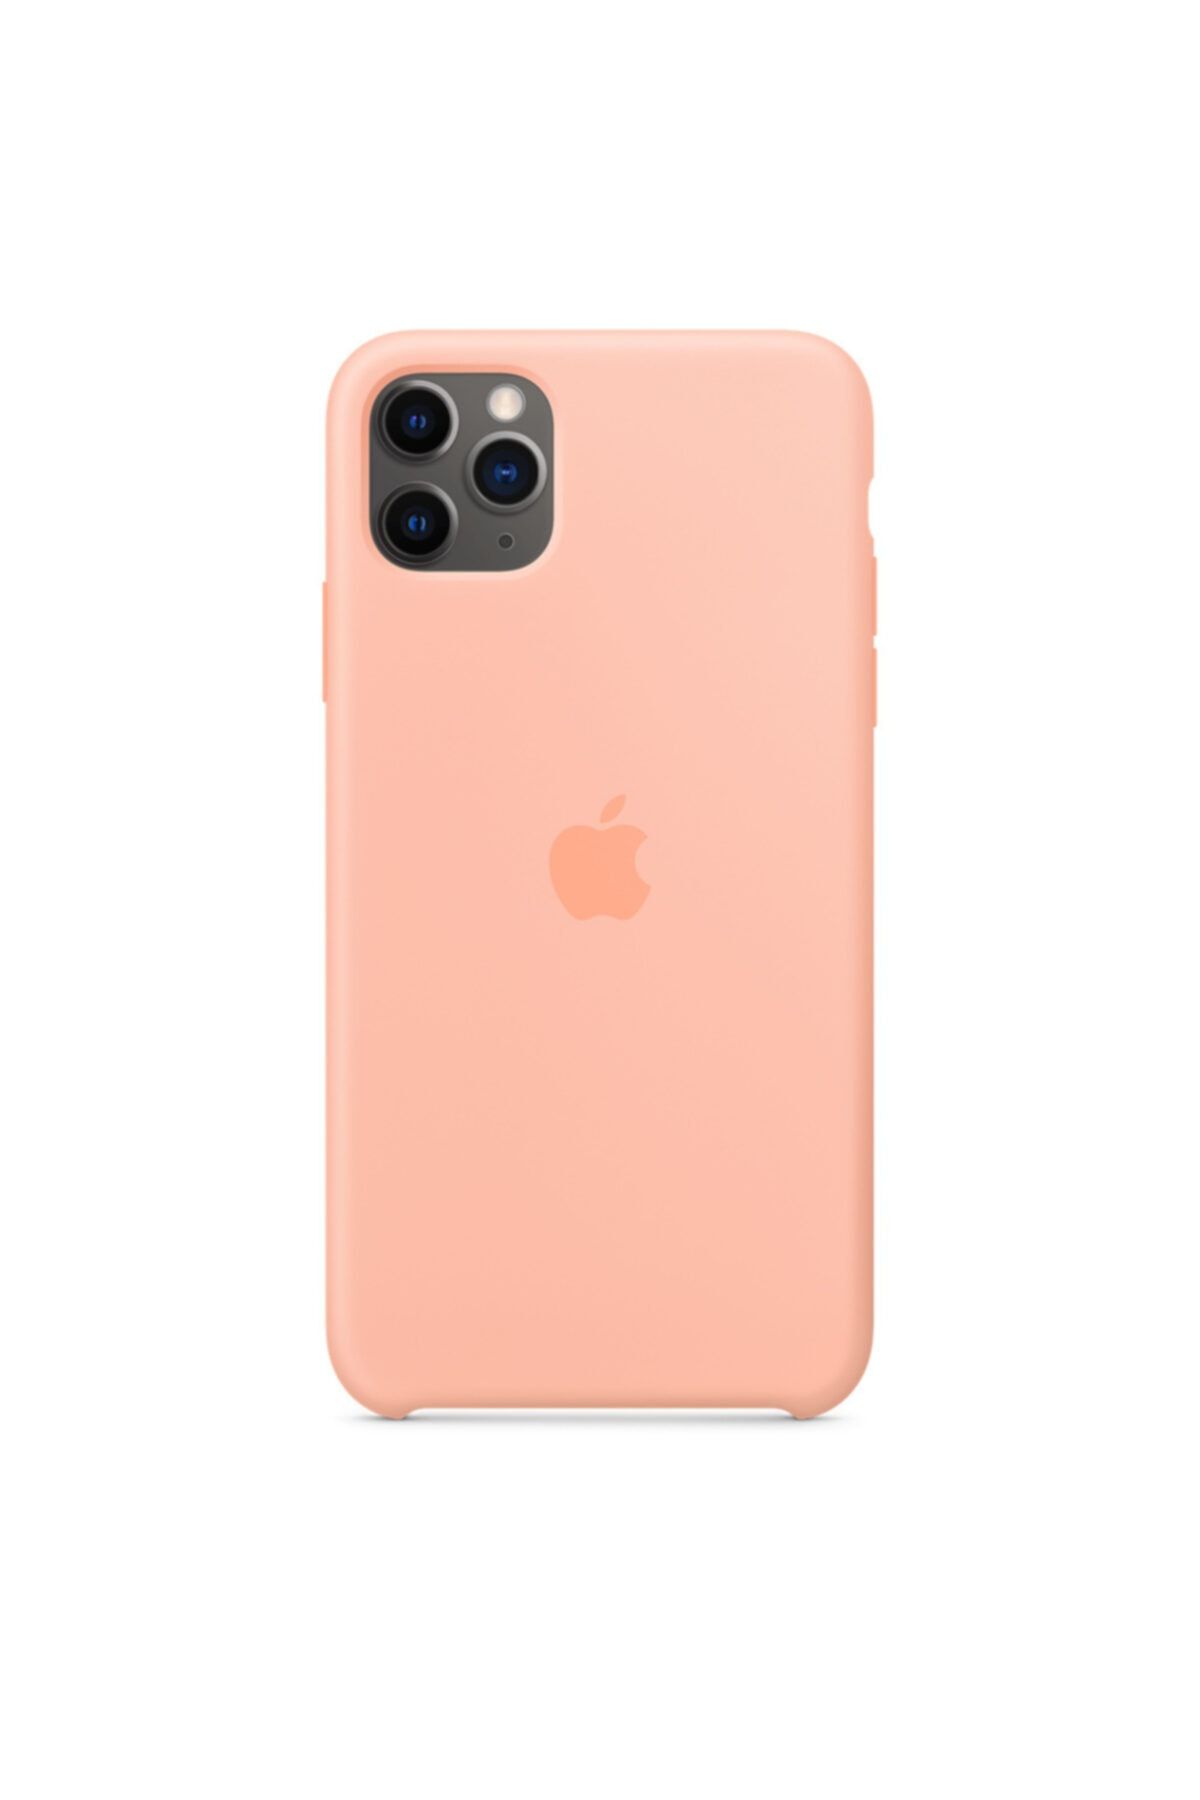 Apple Iphone 11 Pro Max Silikon Kılıf Greyfurt - My1h2zm/a